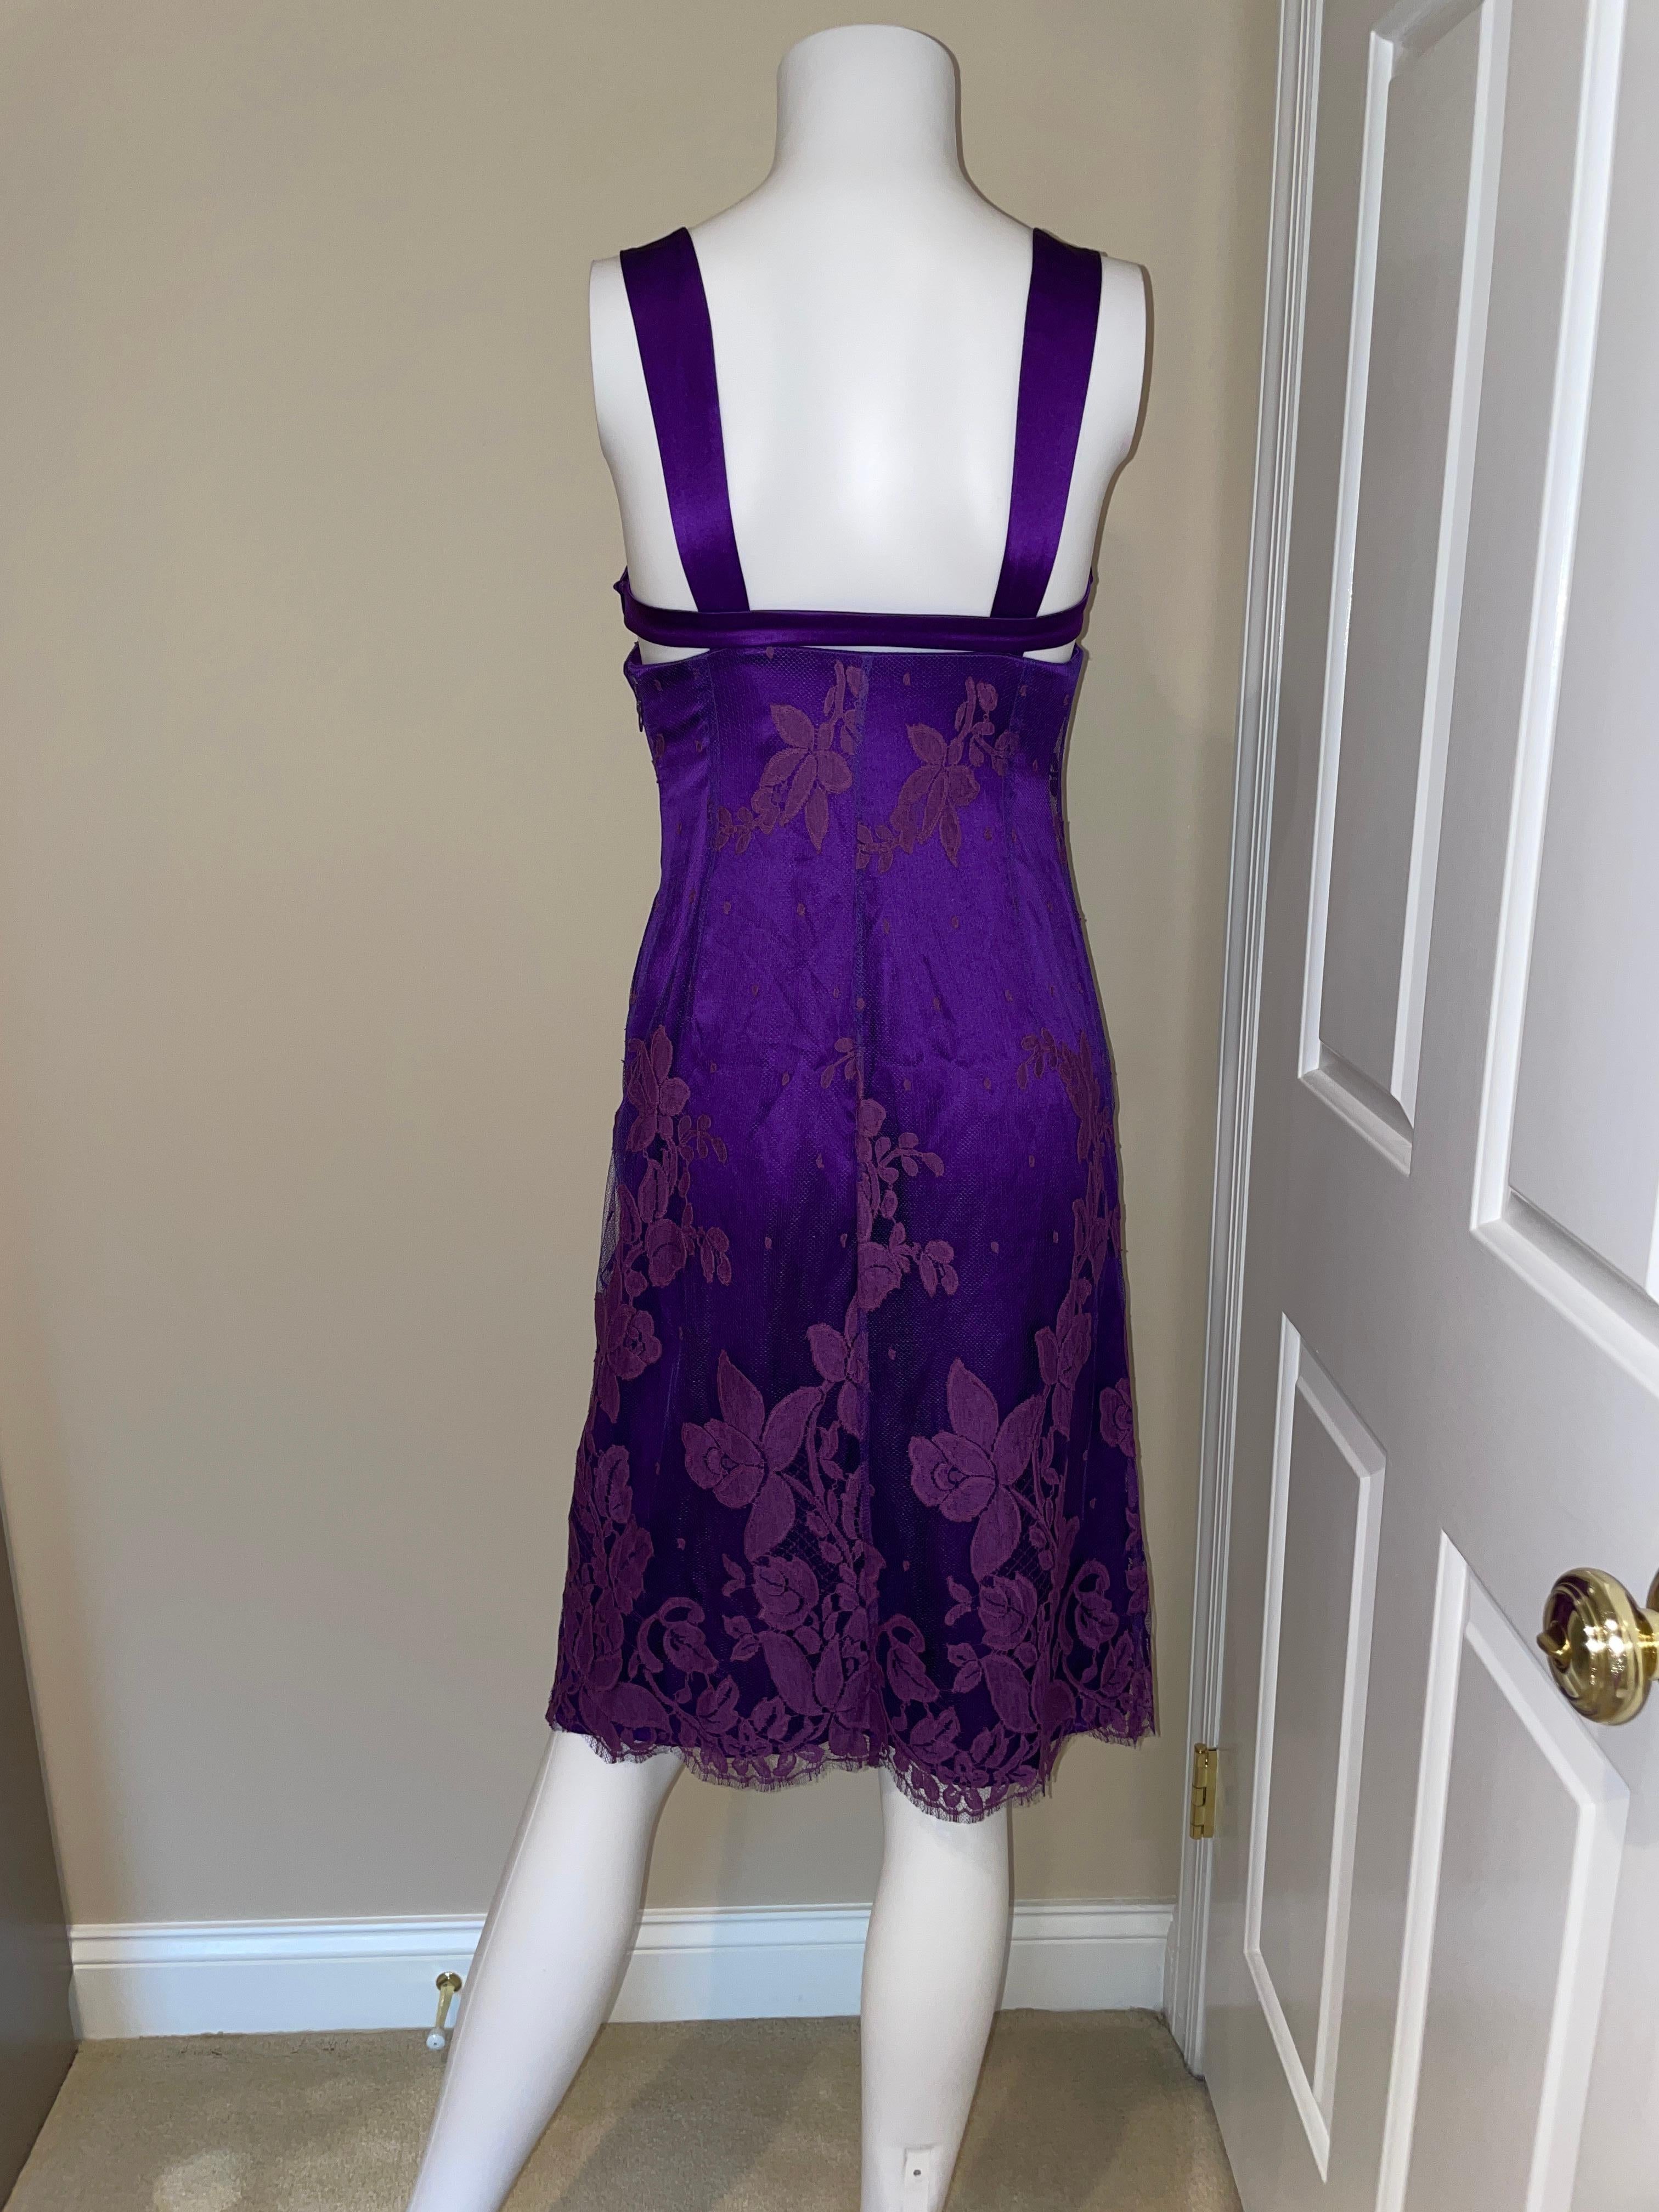 Women's GIANNI VERSACE c. 1996 purple lace dress